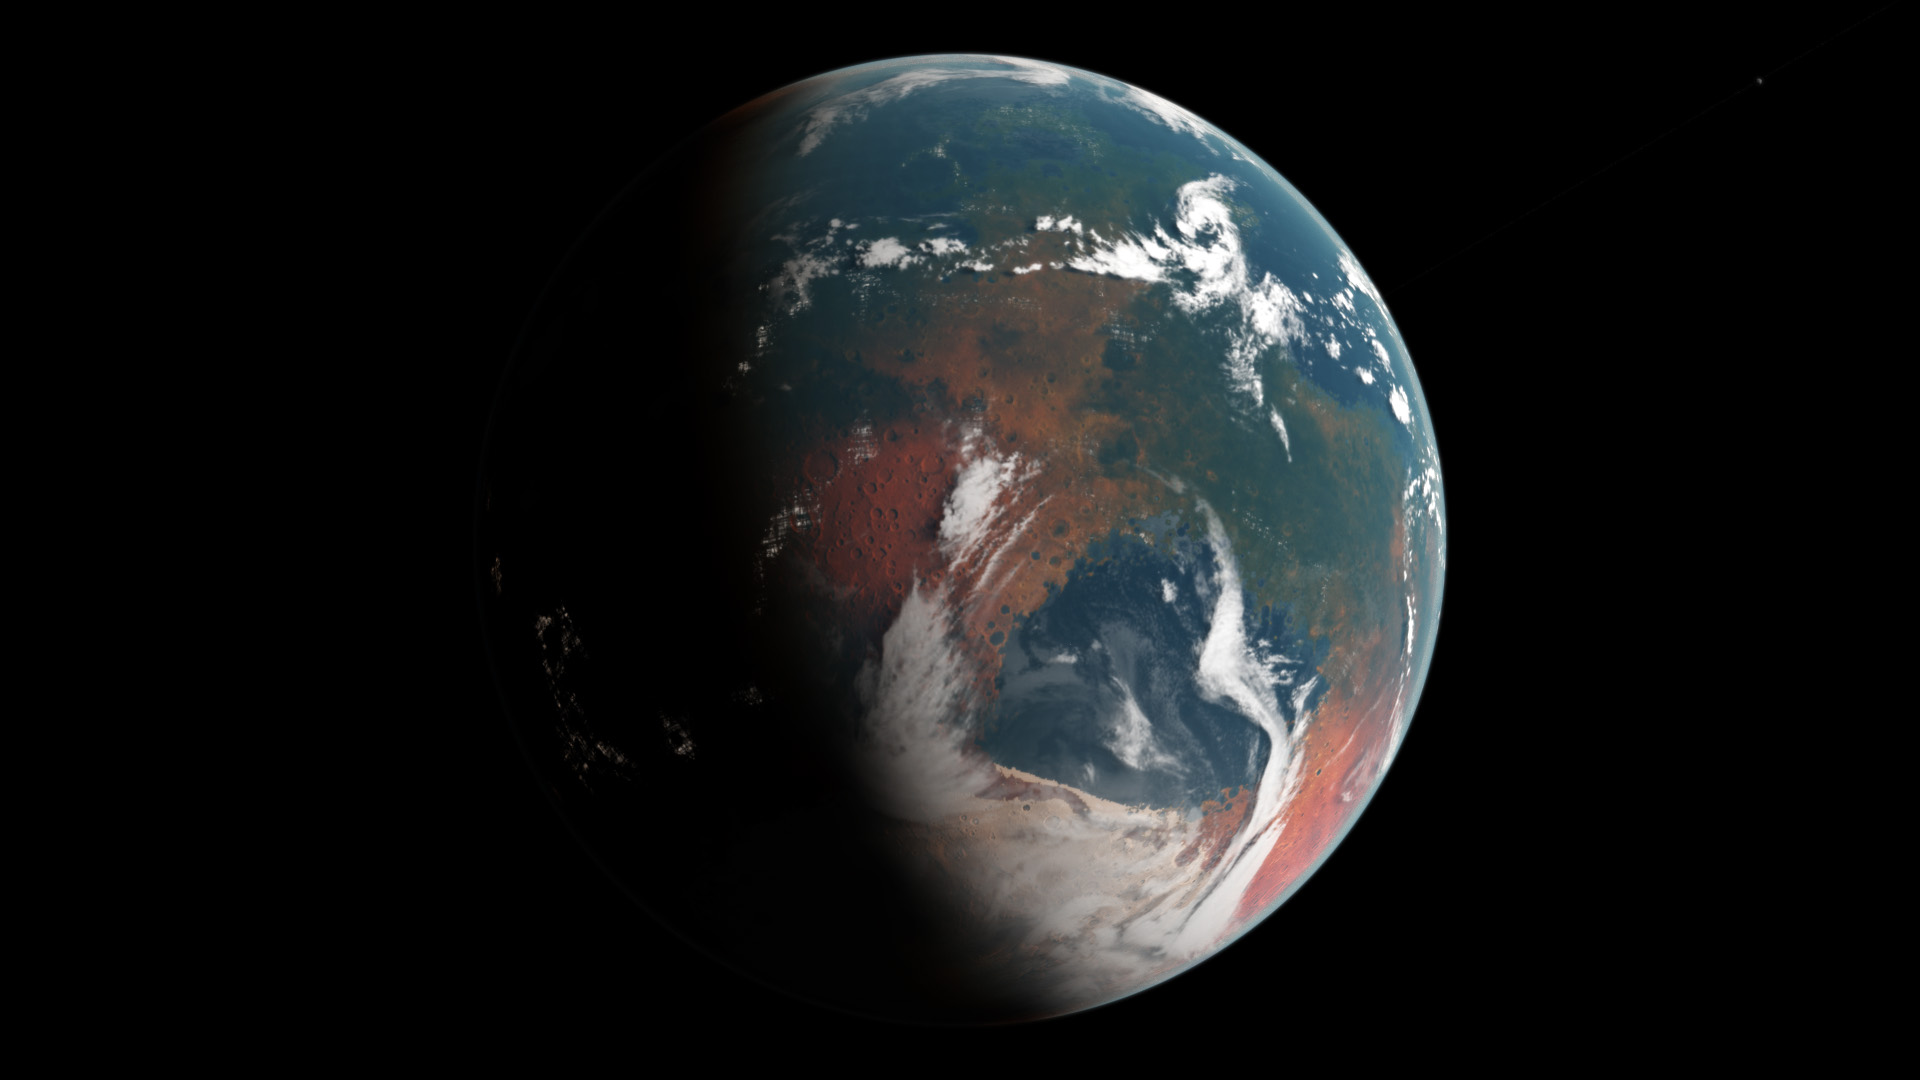 universe sandbox 2 terraforming mars